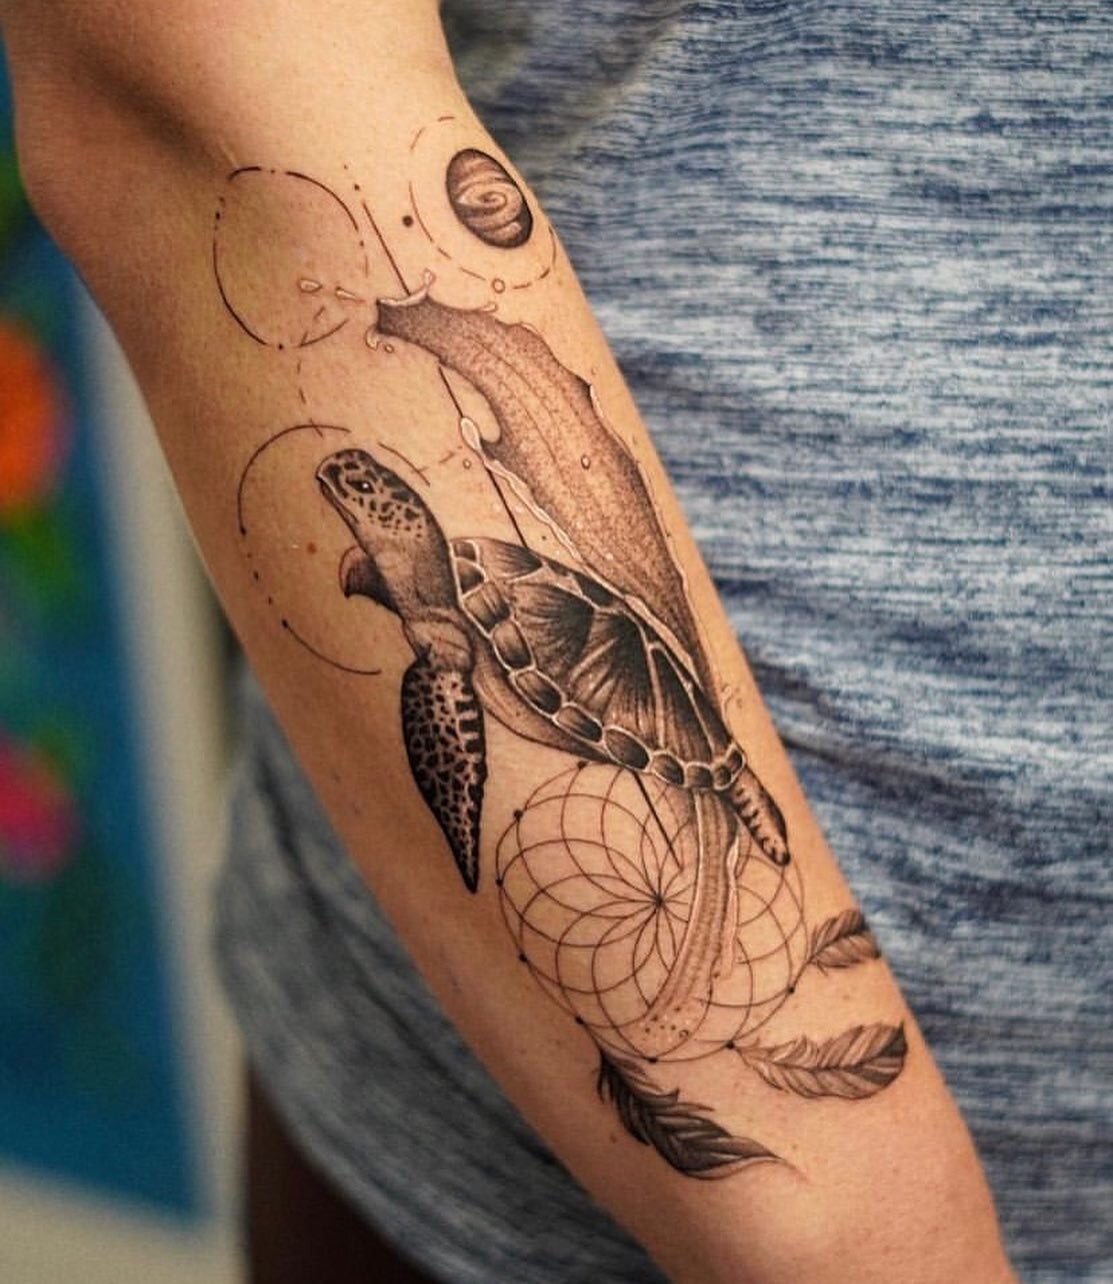 Fine line sea turtles by @malorymorenoart!
3KLI@THREEKINGSTATTOO.COM
.
.
.
#3kli #threekingstattoo #threekingslongisland #finelinetattoo #blackandgreytattoo #fineline #longislandtattooshop #longislandtattoo #finelinetattoo #blackandgreytattoo #tattoo